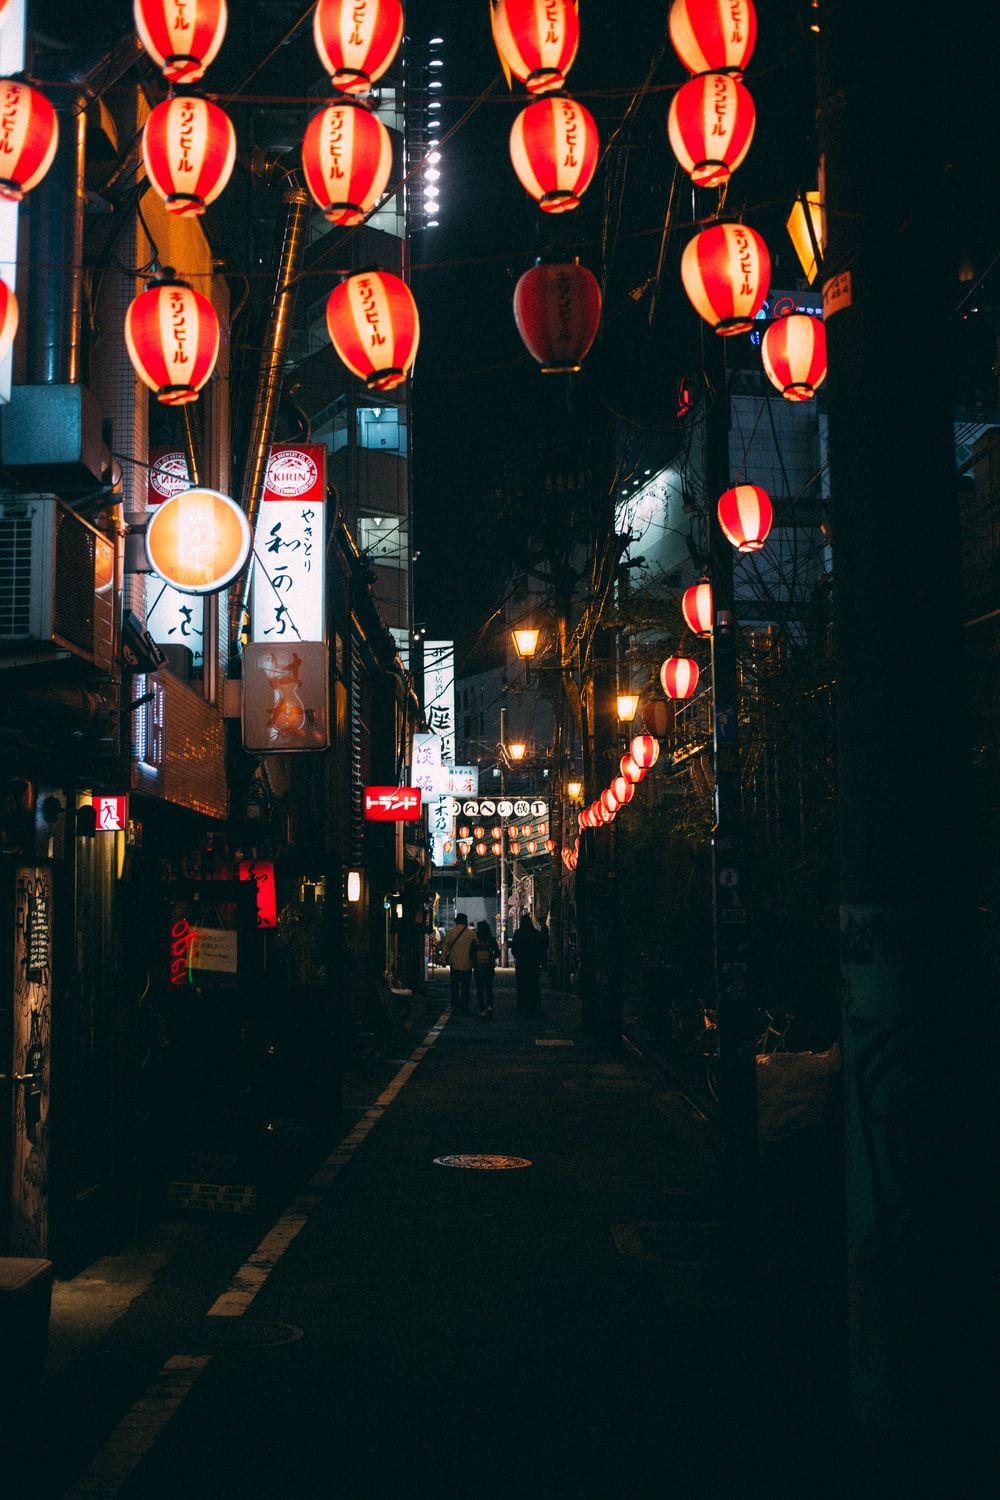 Tokyo Nightlife Picture. Download Free Image